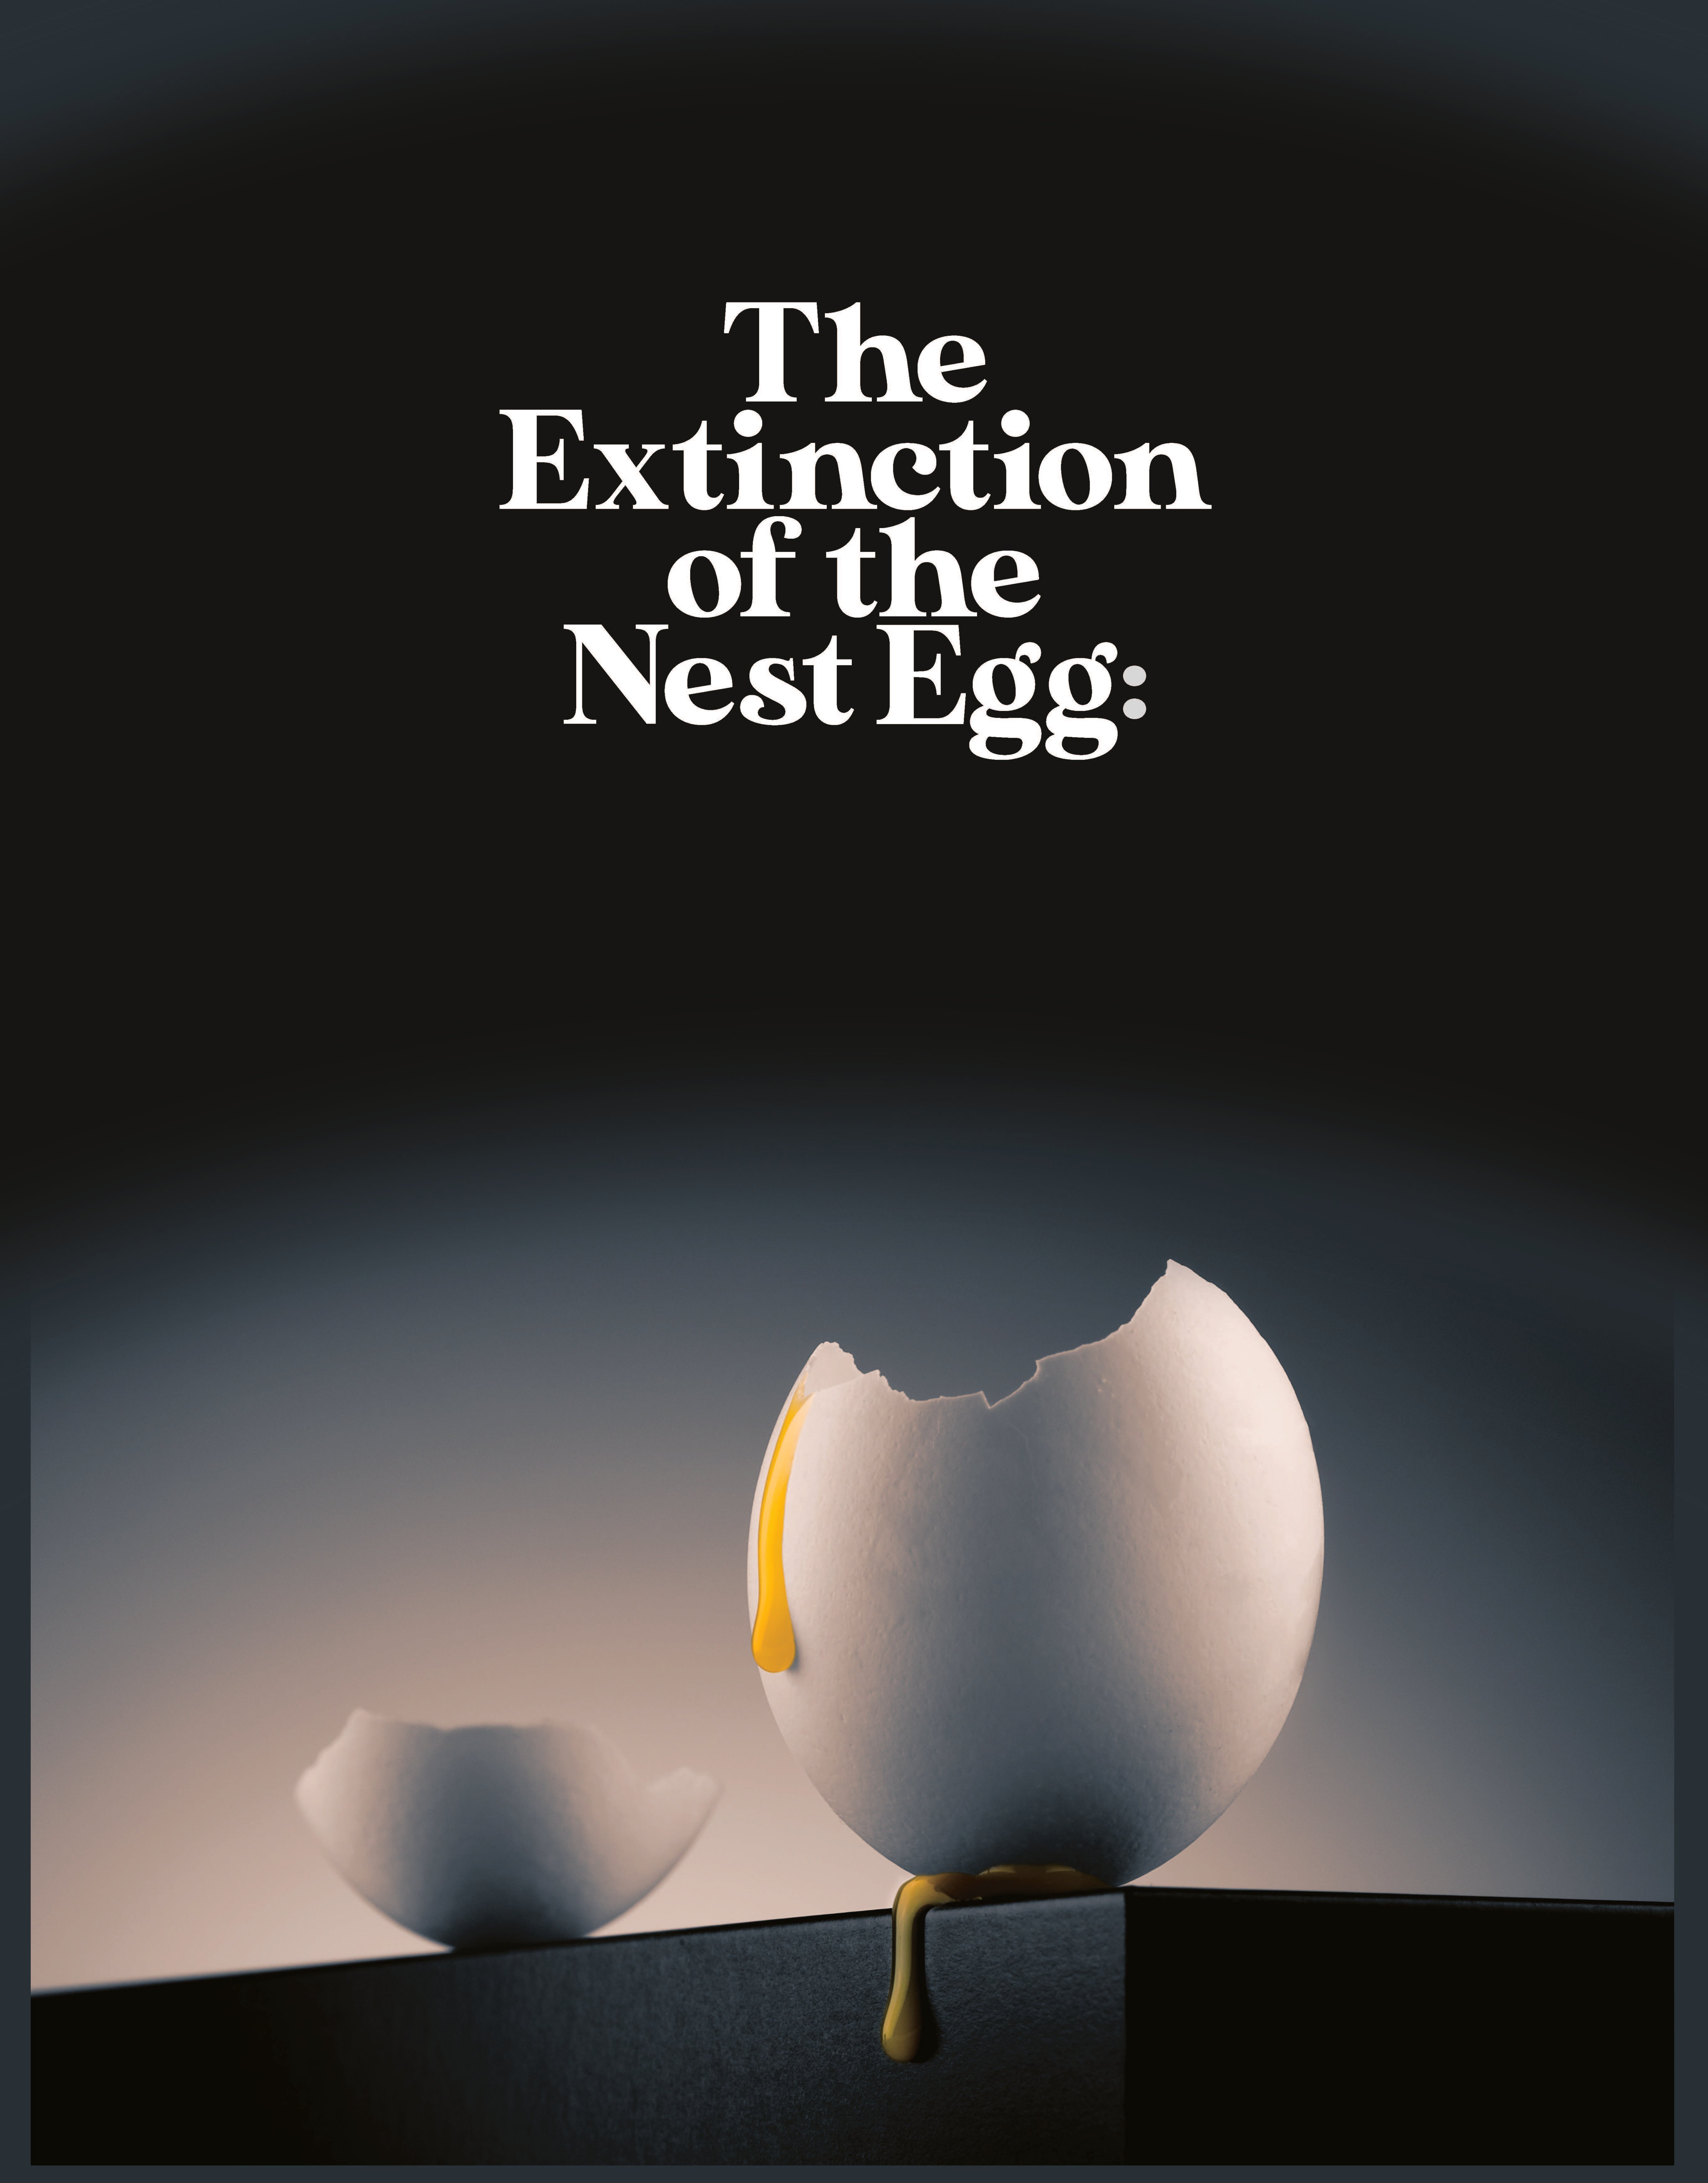 The Extinction of the Nest Egg